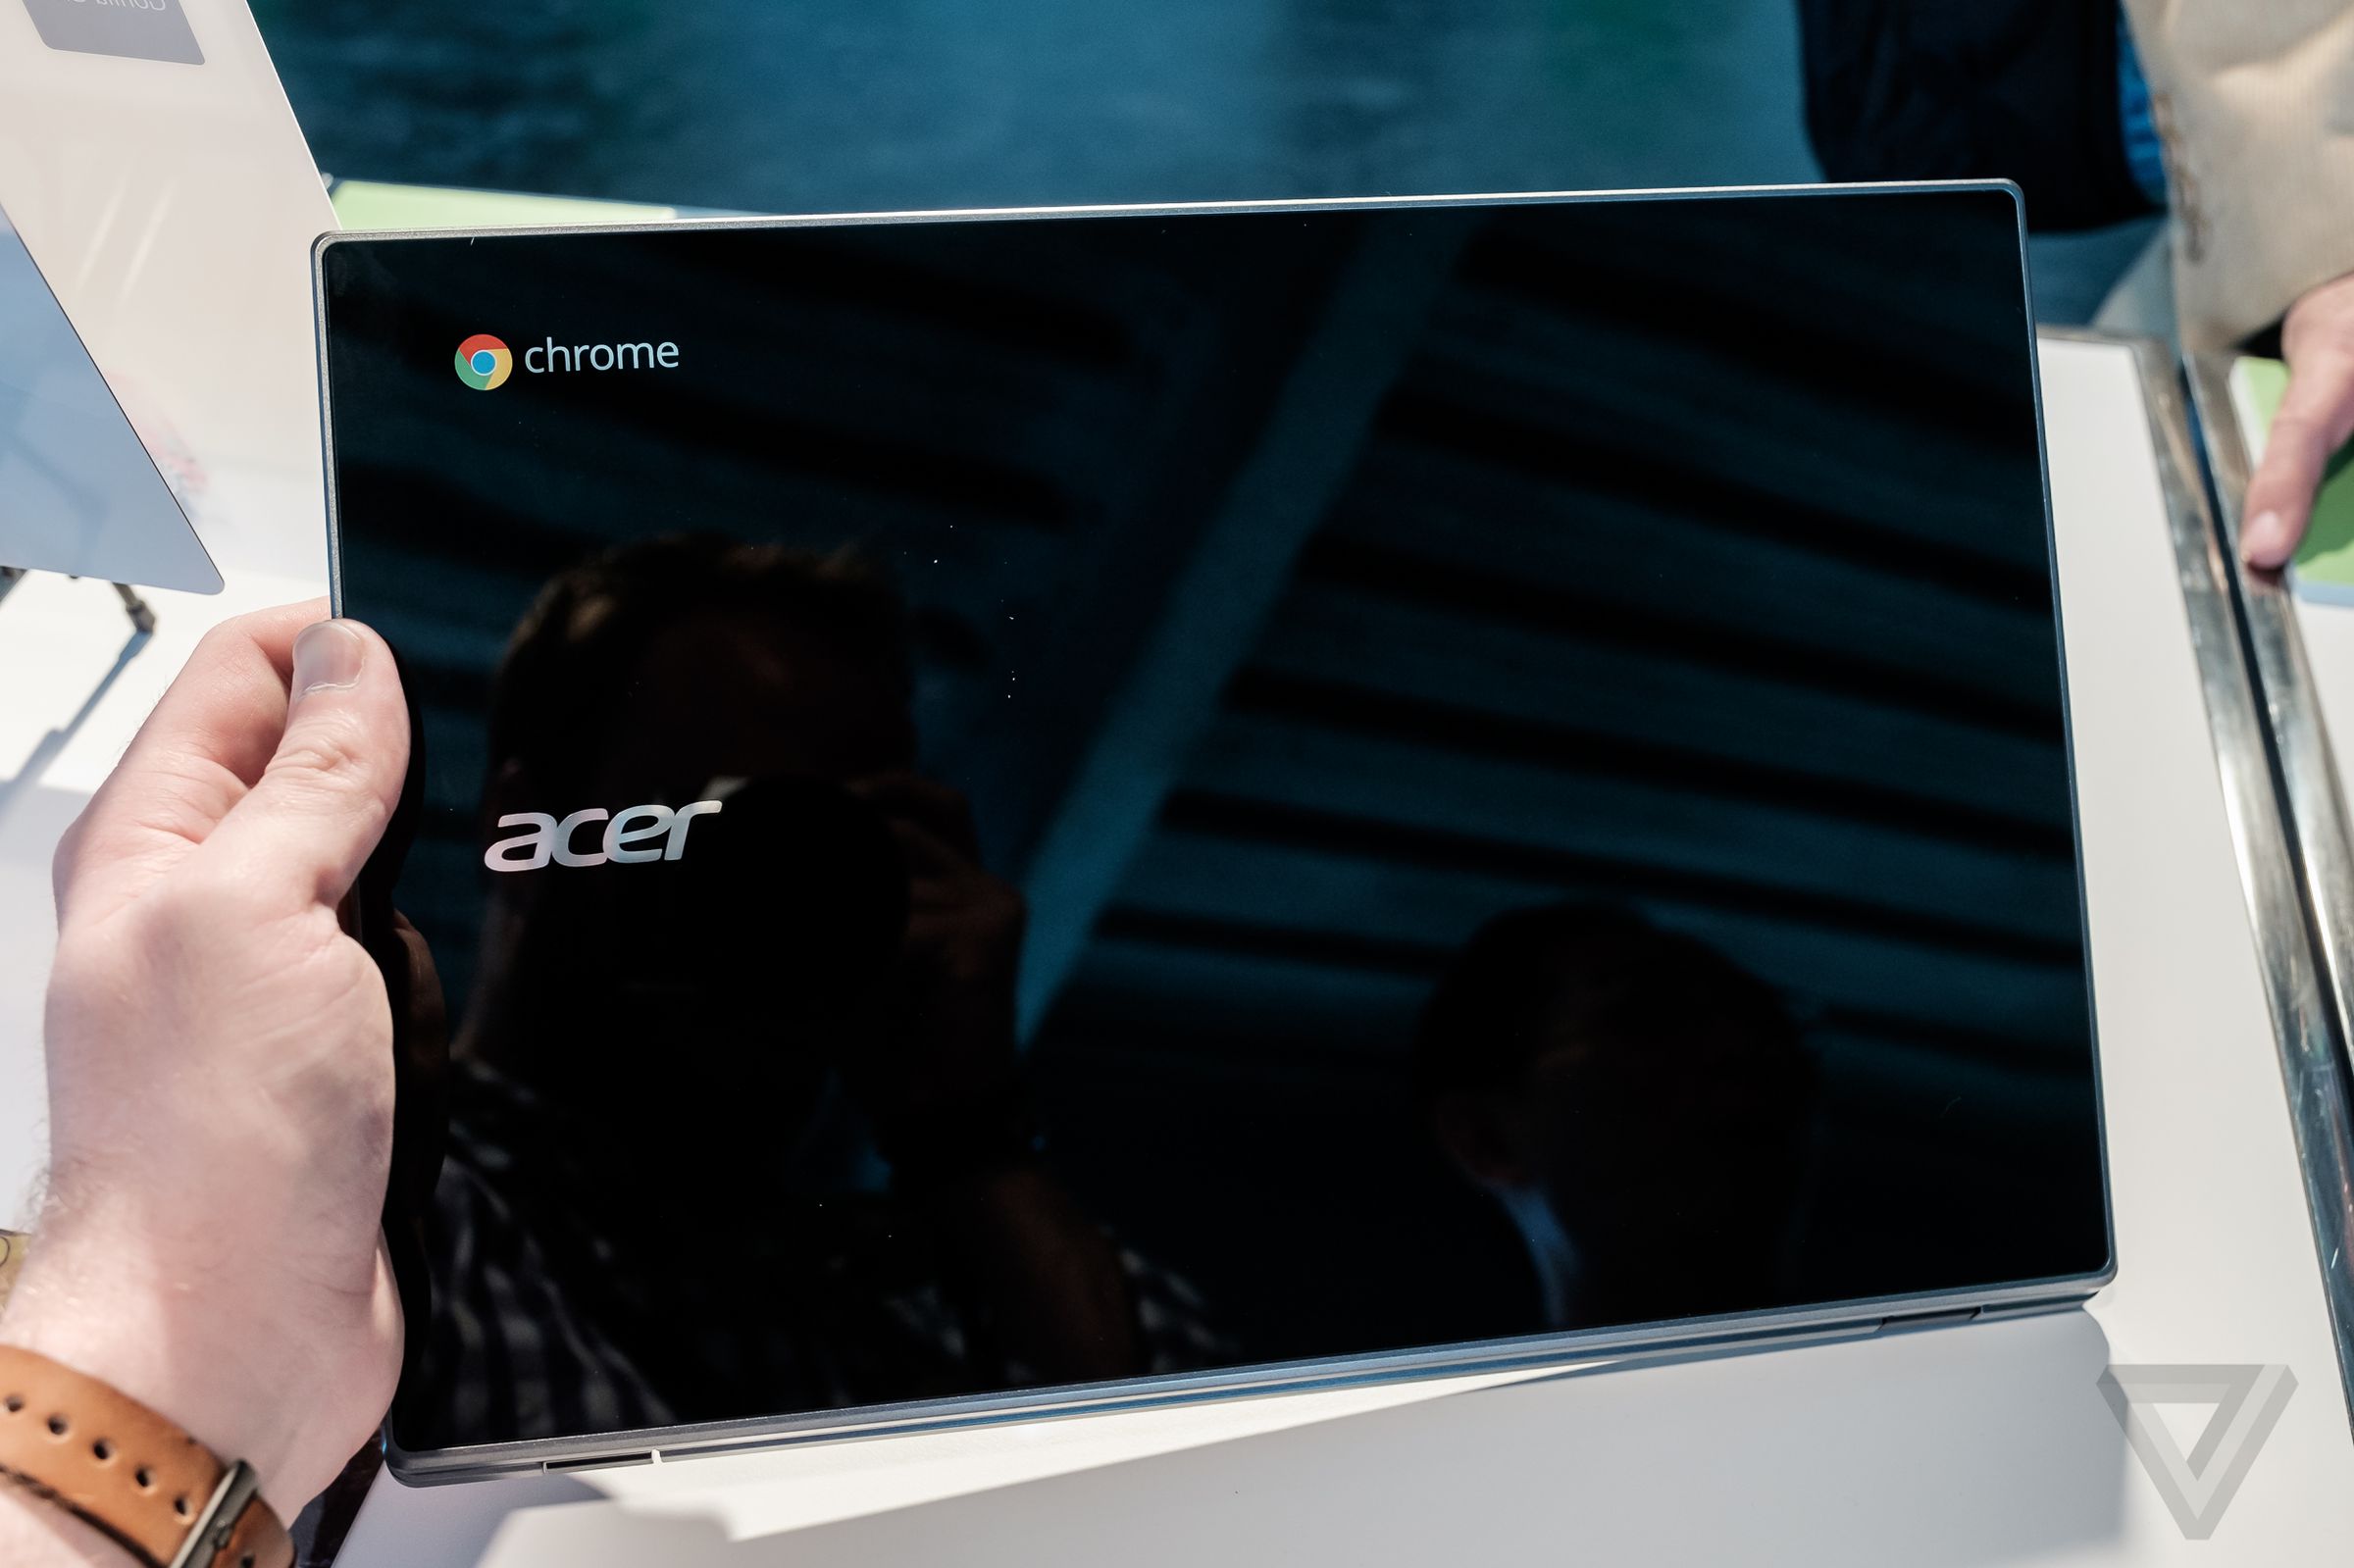 Acer Chromebook 14 for Work hands on photos